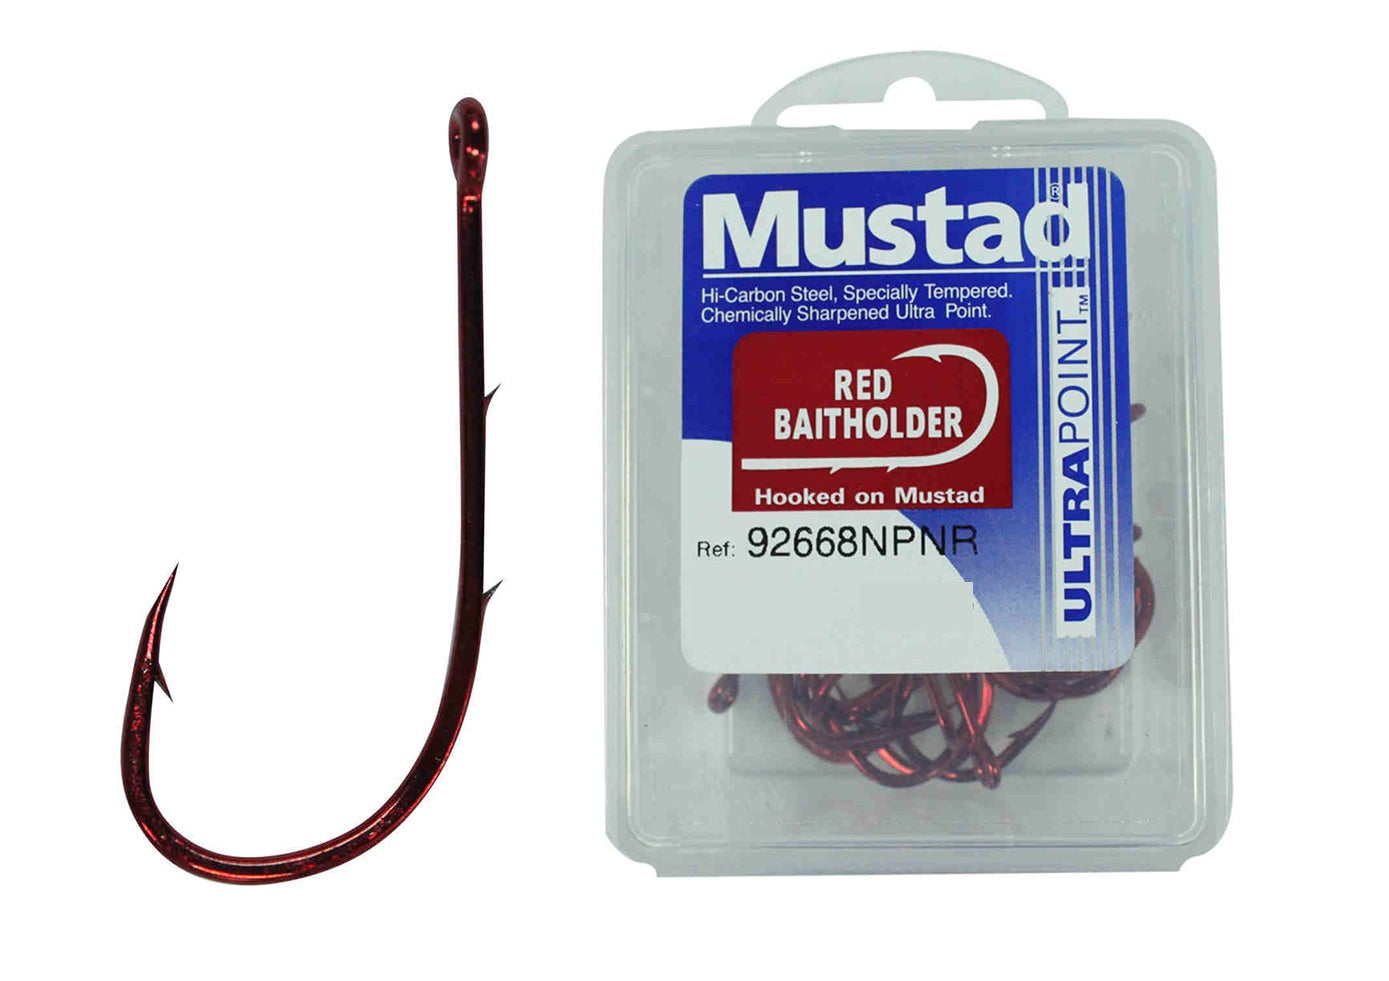 1 Box of Mustad 92668NPNR Red Baitholder Chemically Sharpened Fishing Hooks